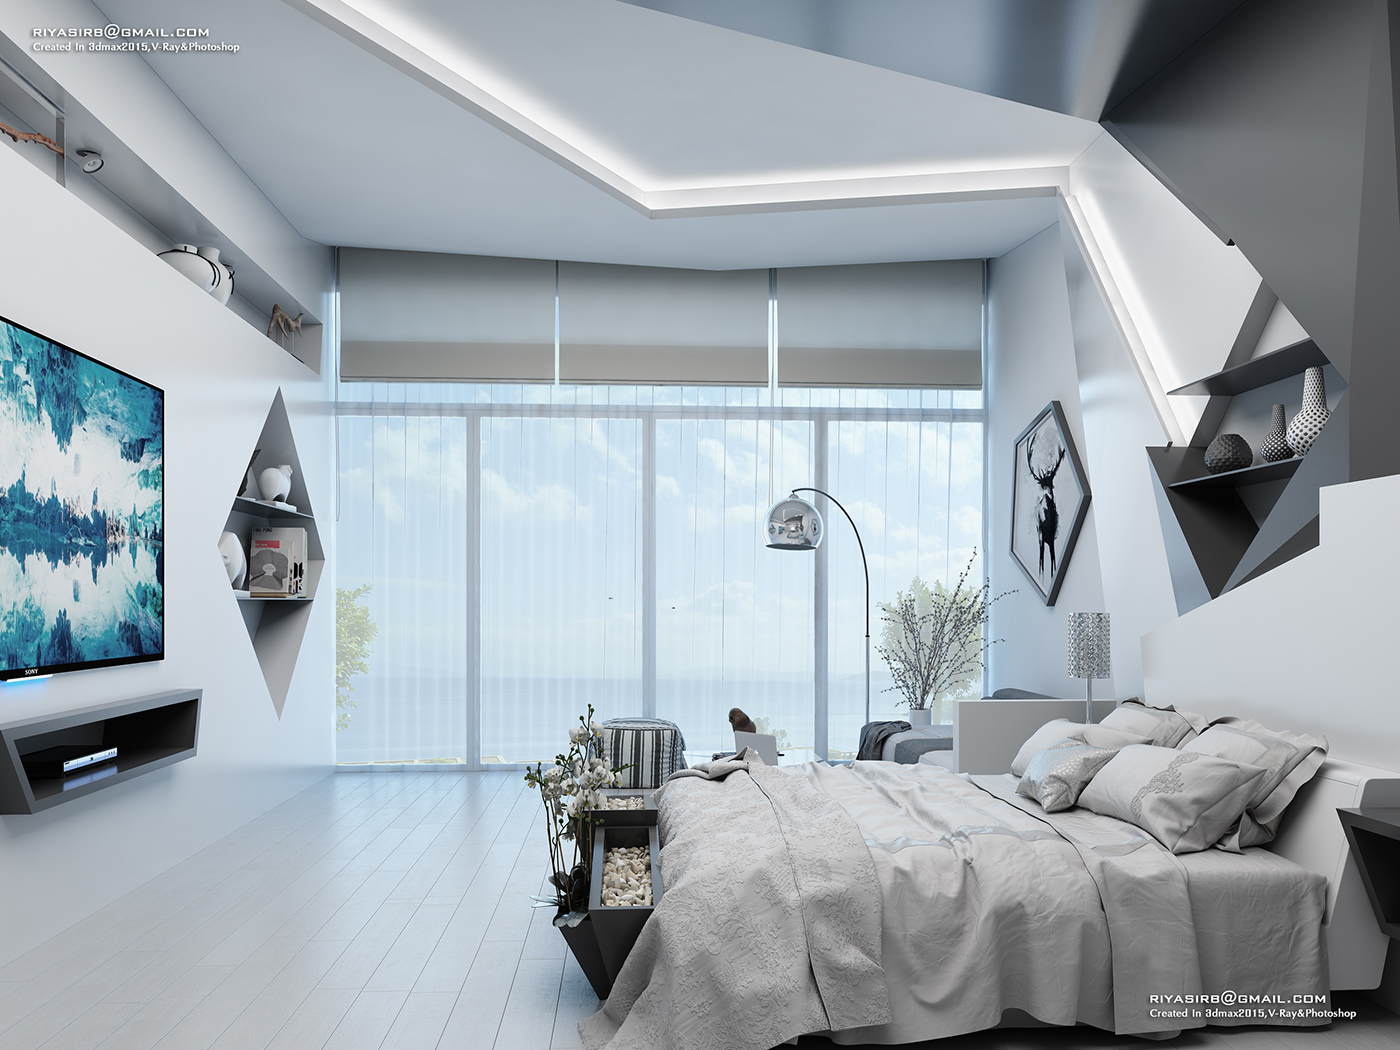 3dsmax vray bedroom futuristic Interior design photoshop black and white 3D CGI